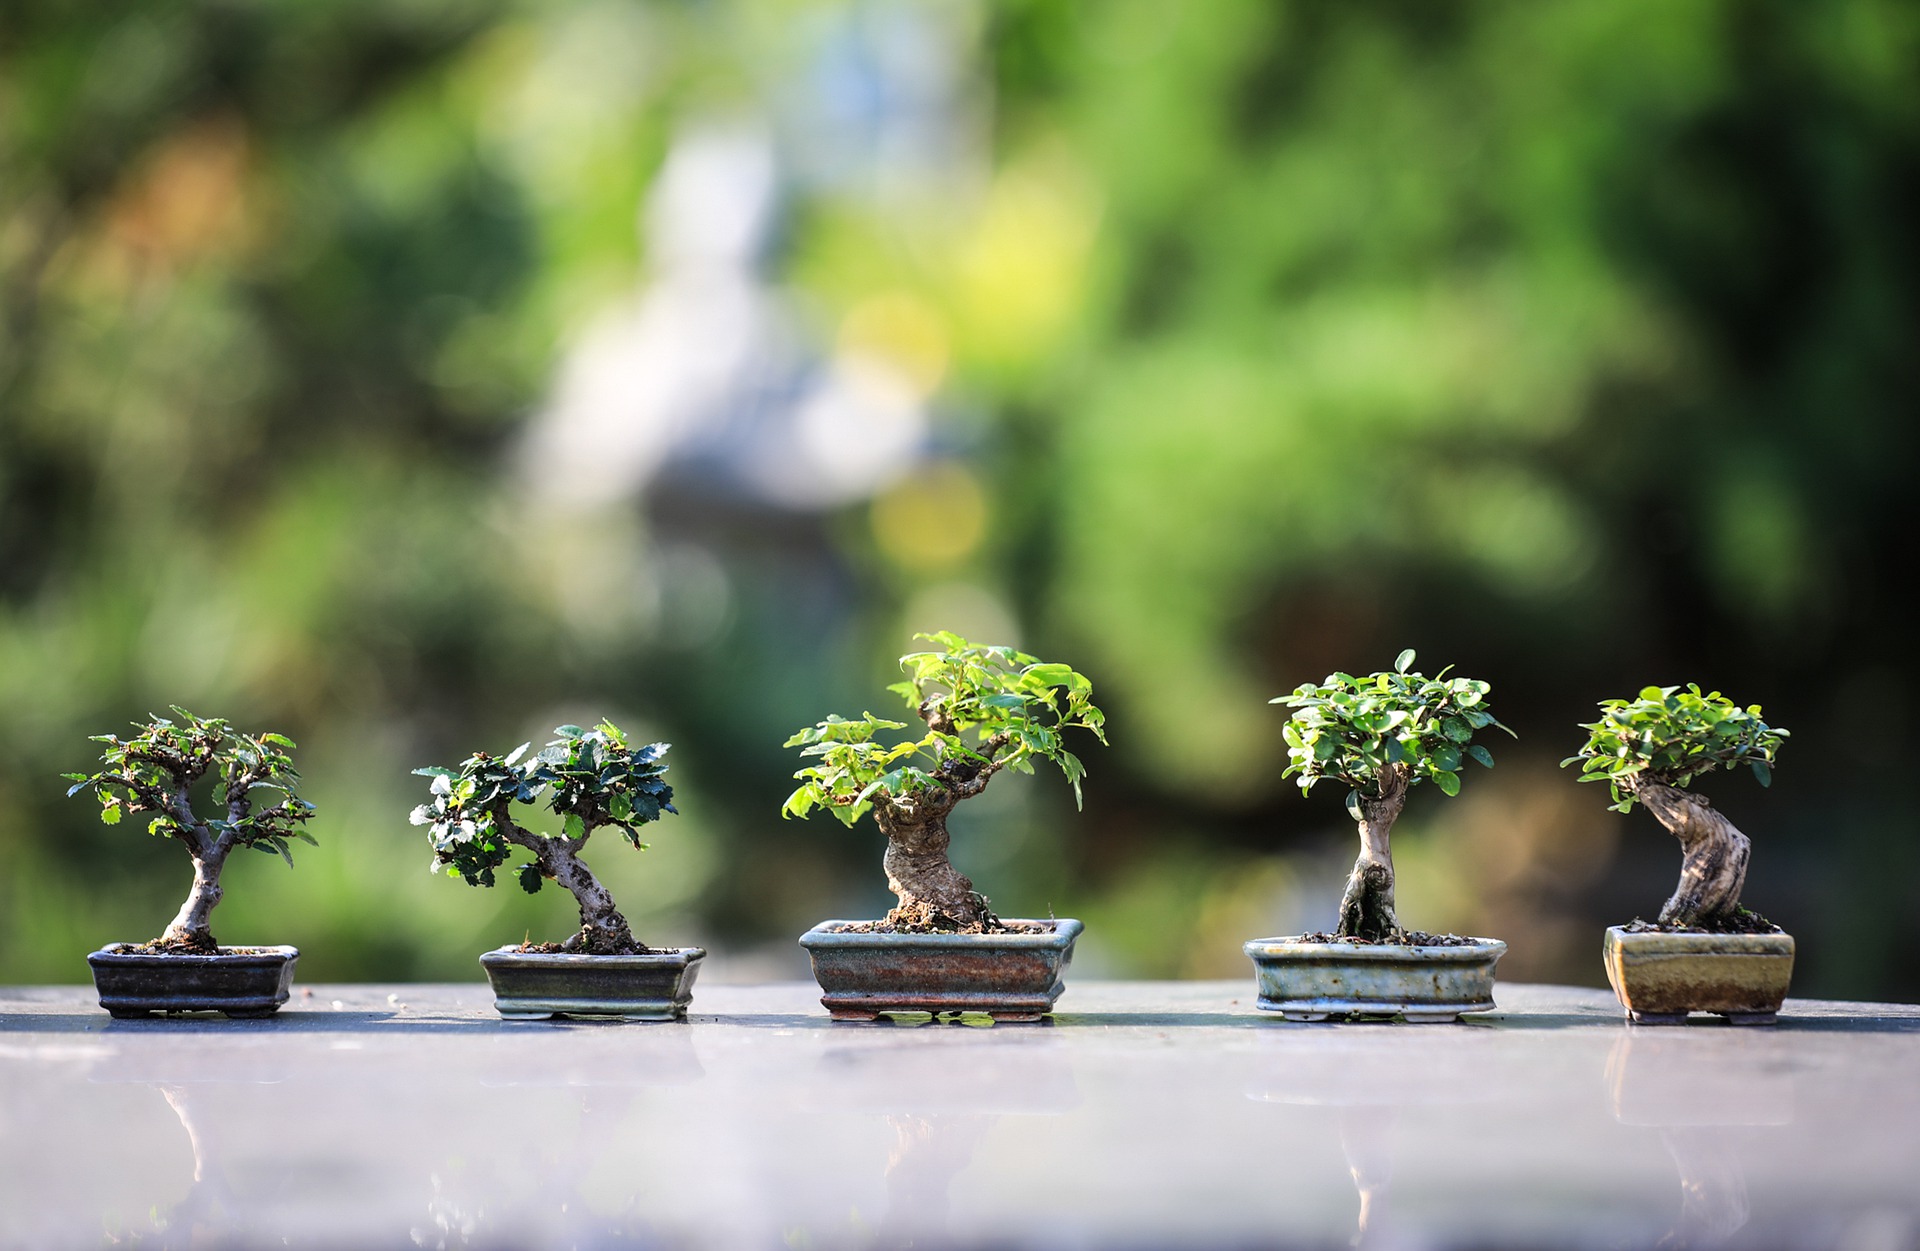 View of bonsai trees